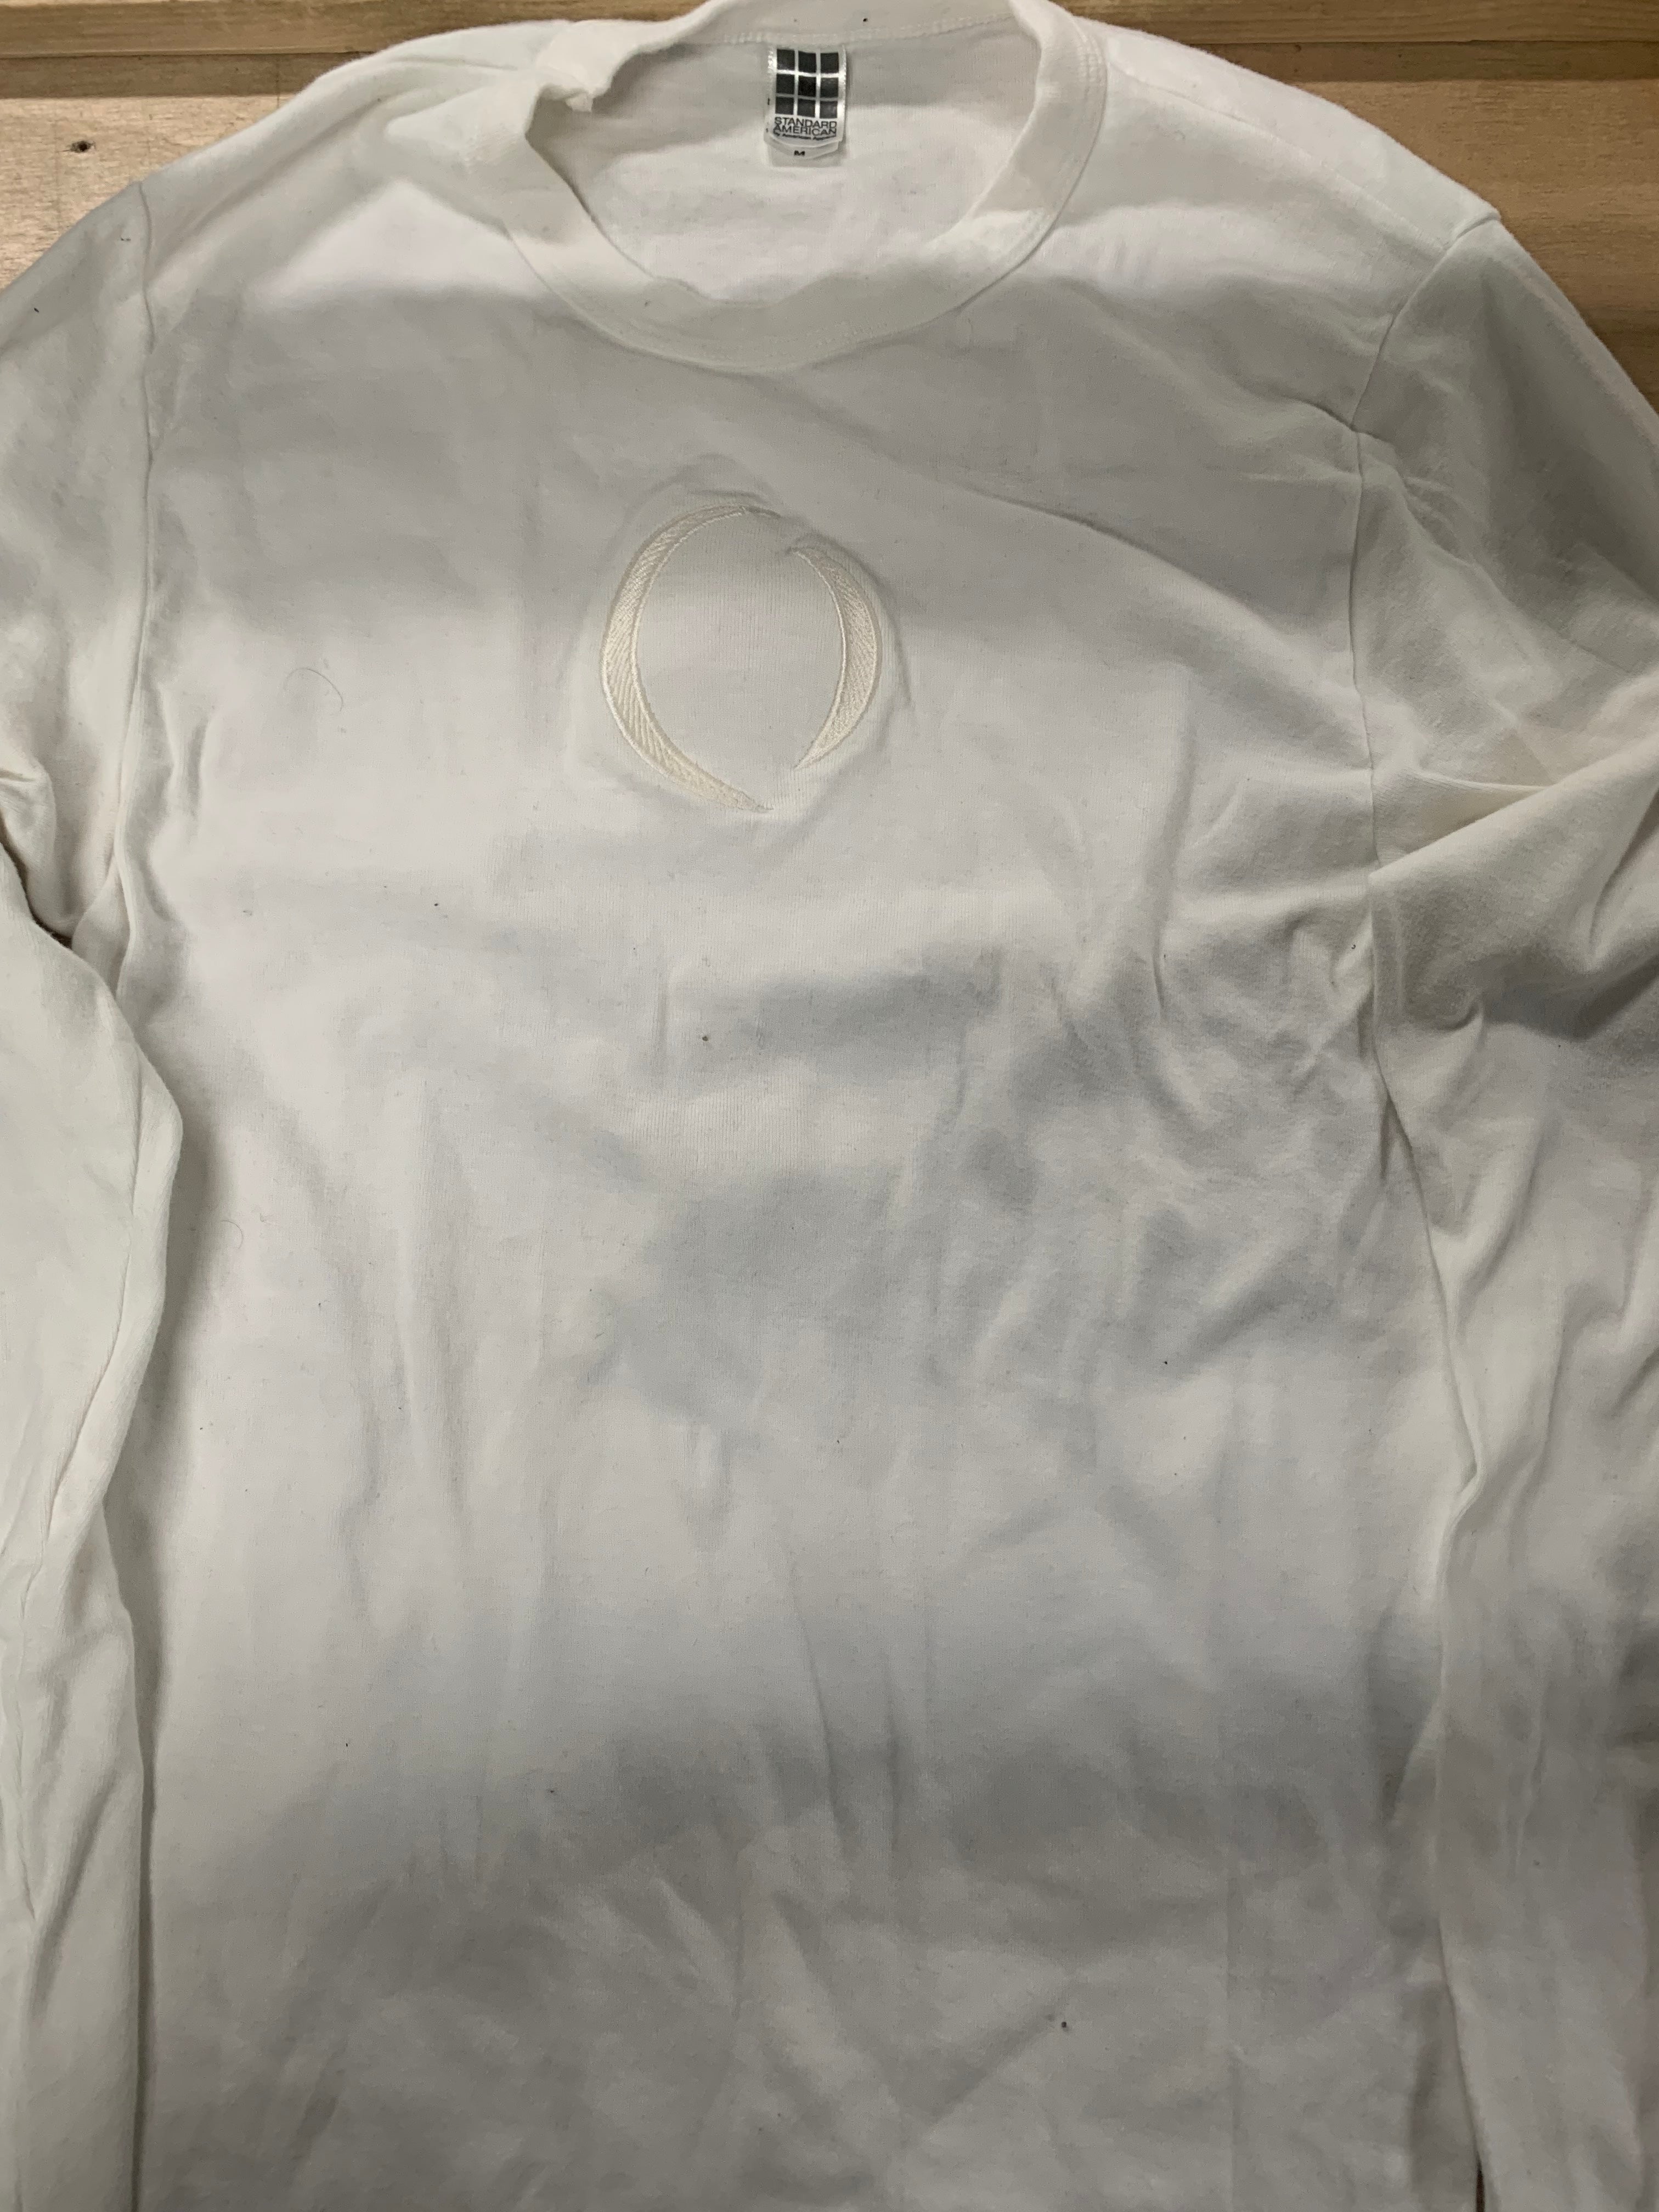 Perfect Circle Longlsleeve T-Shirt, White, M